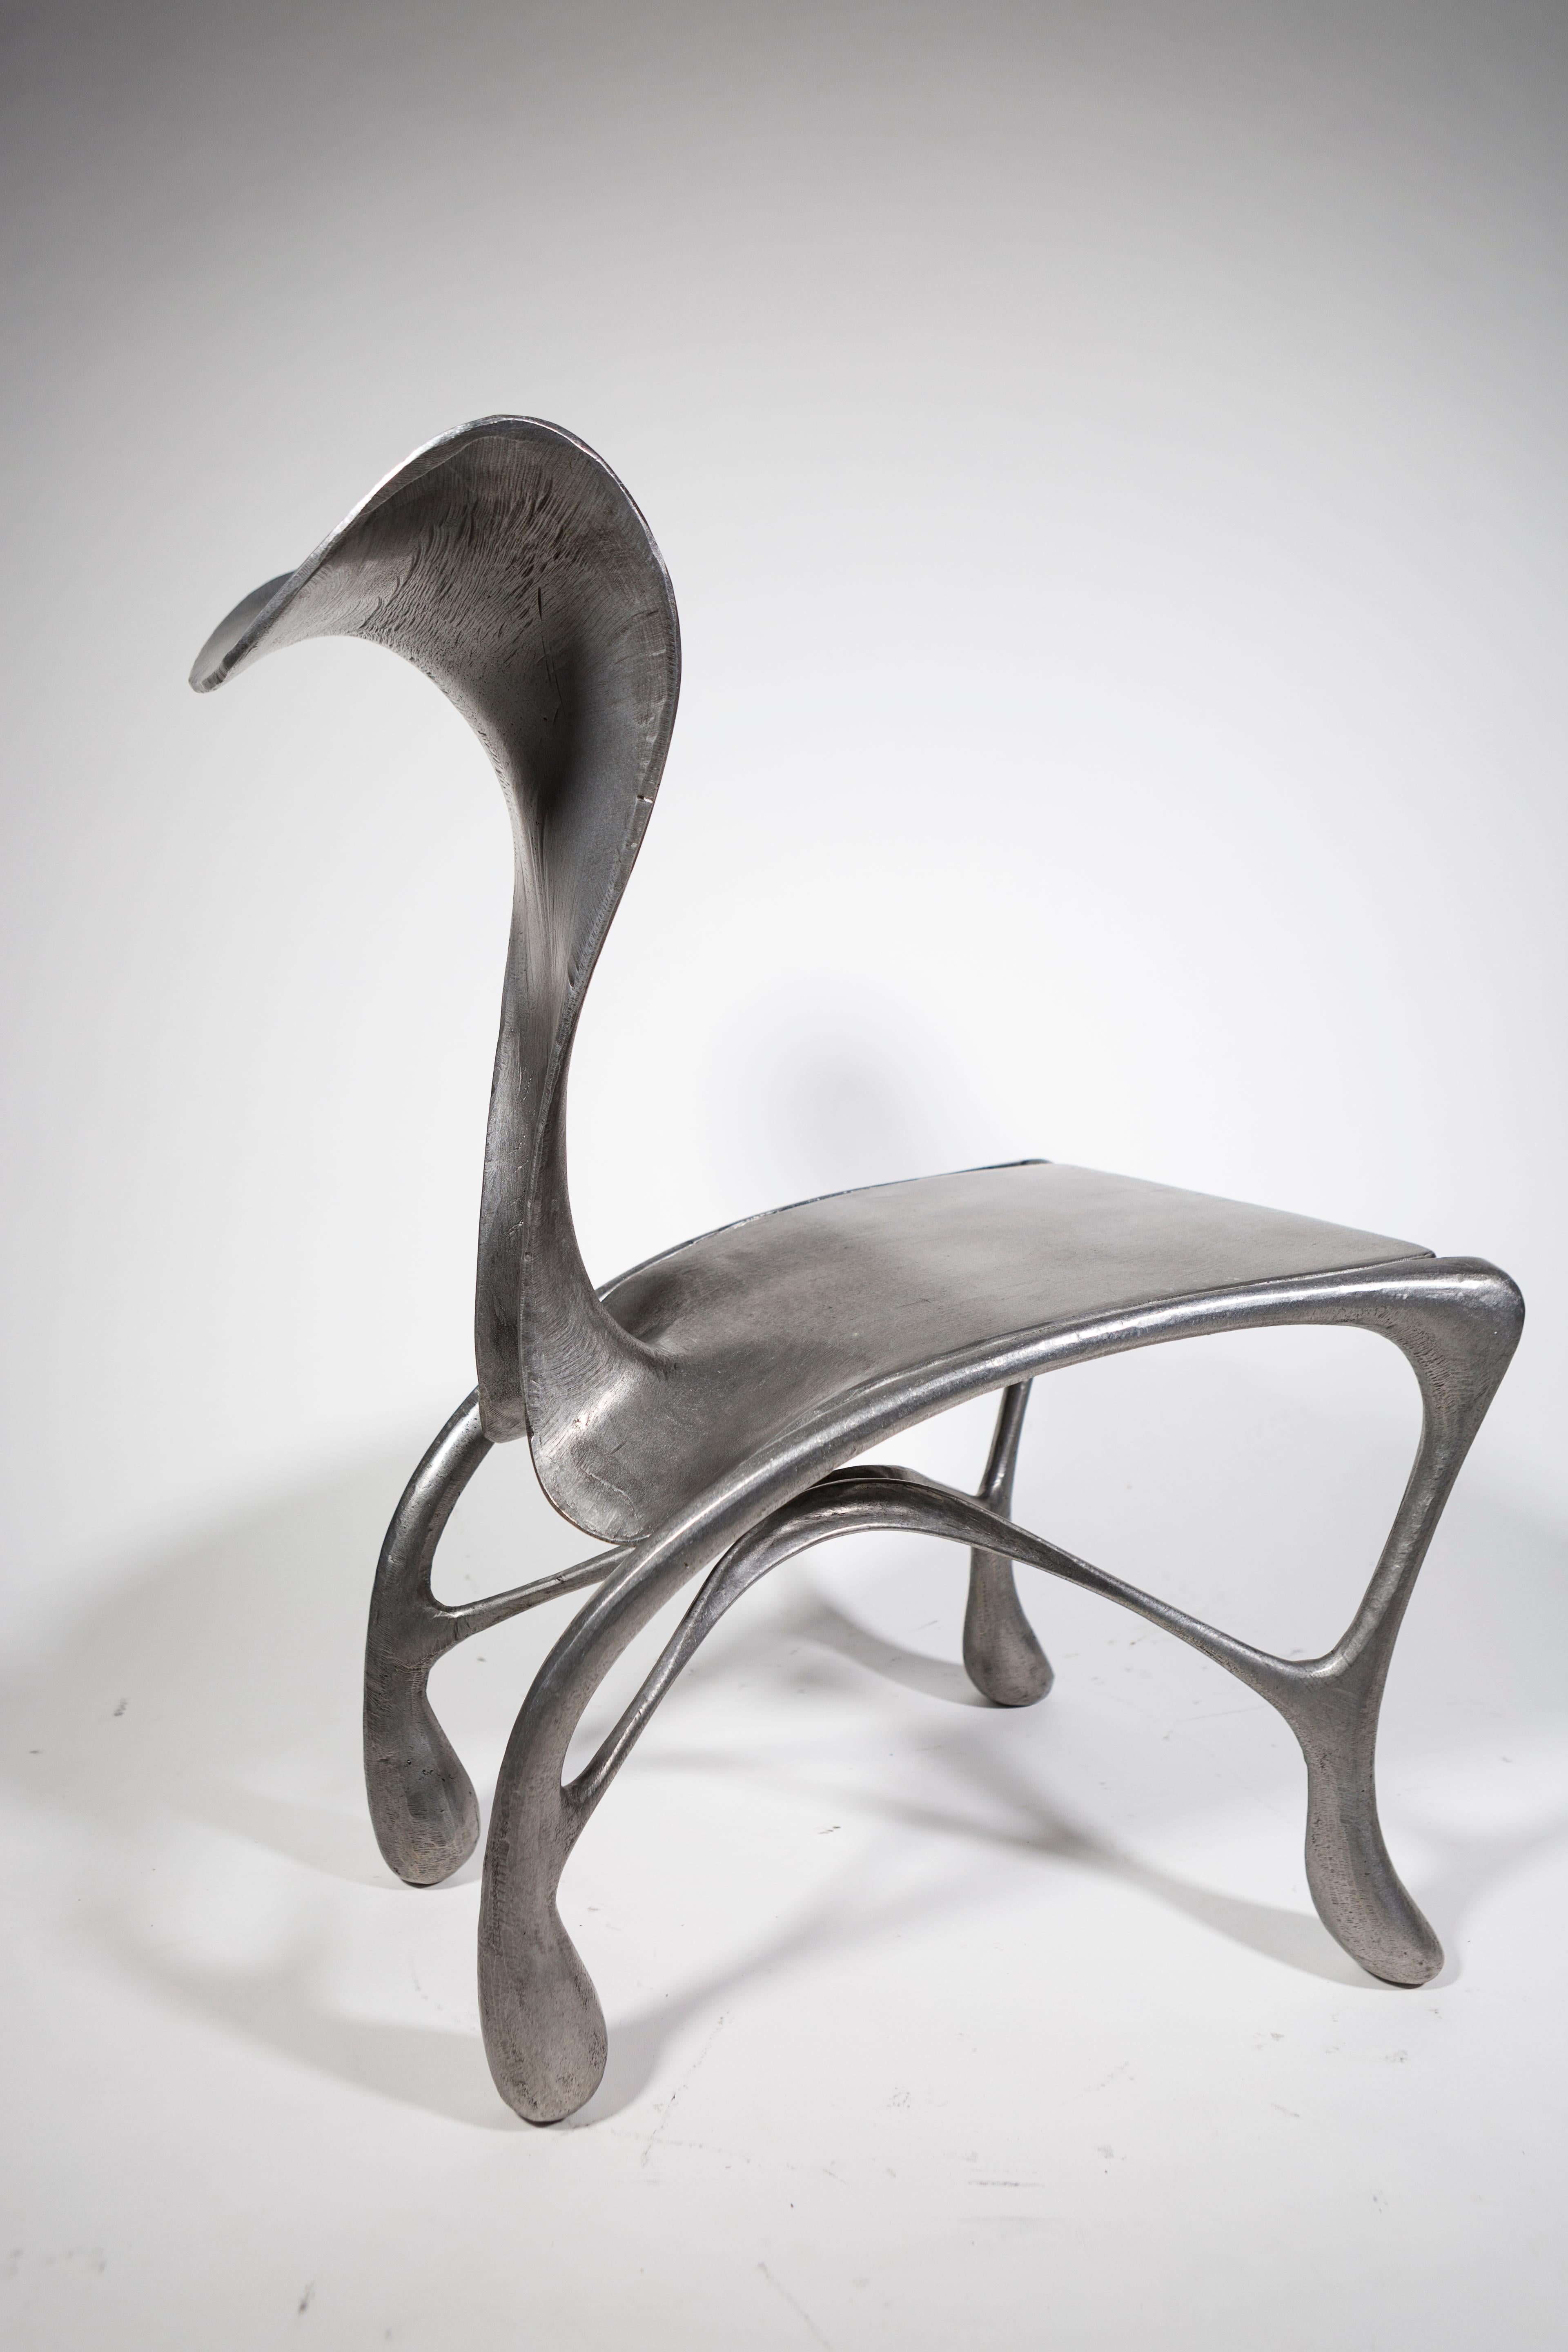 Hoodie Side Chair, Hand-Carved/Cast Aluminum, Jordan Mozer, USA, 2018 (Aluminium) im Angebot